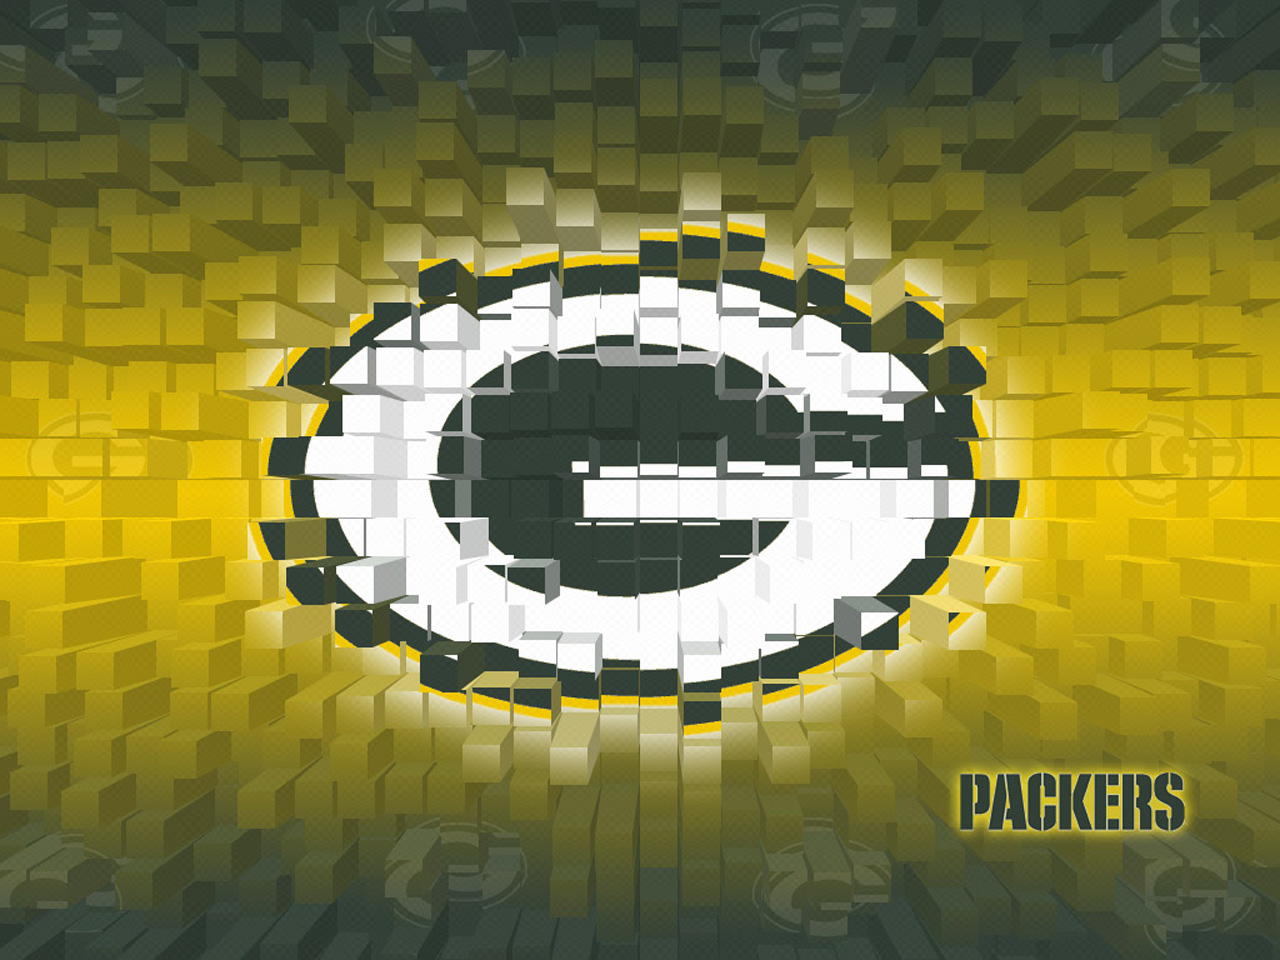 Wallpaper De Green Bay Packers Image